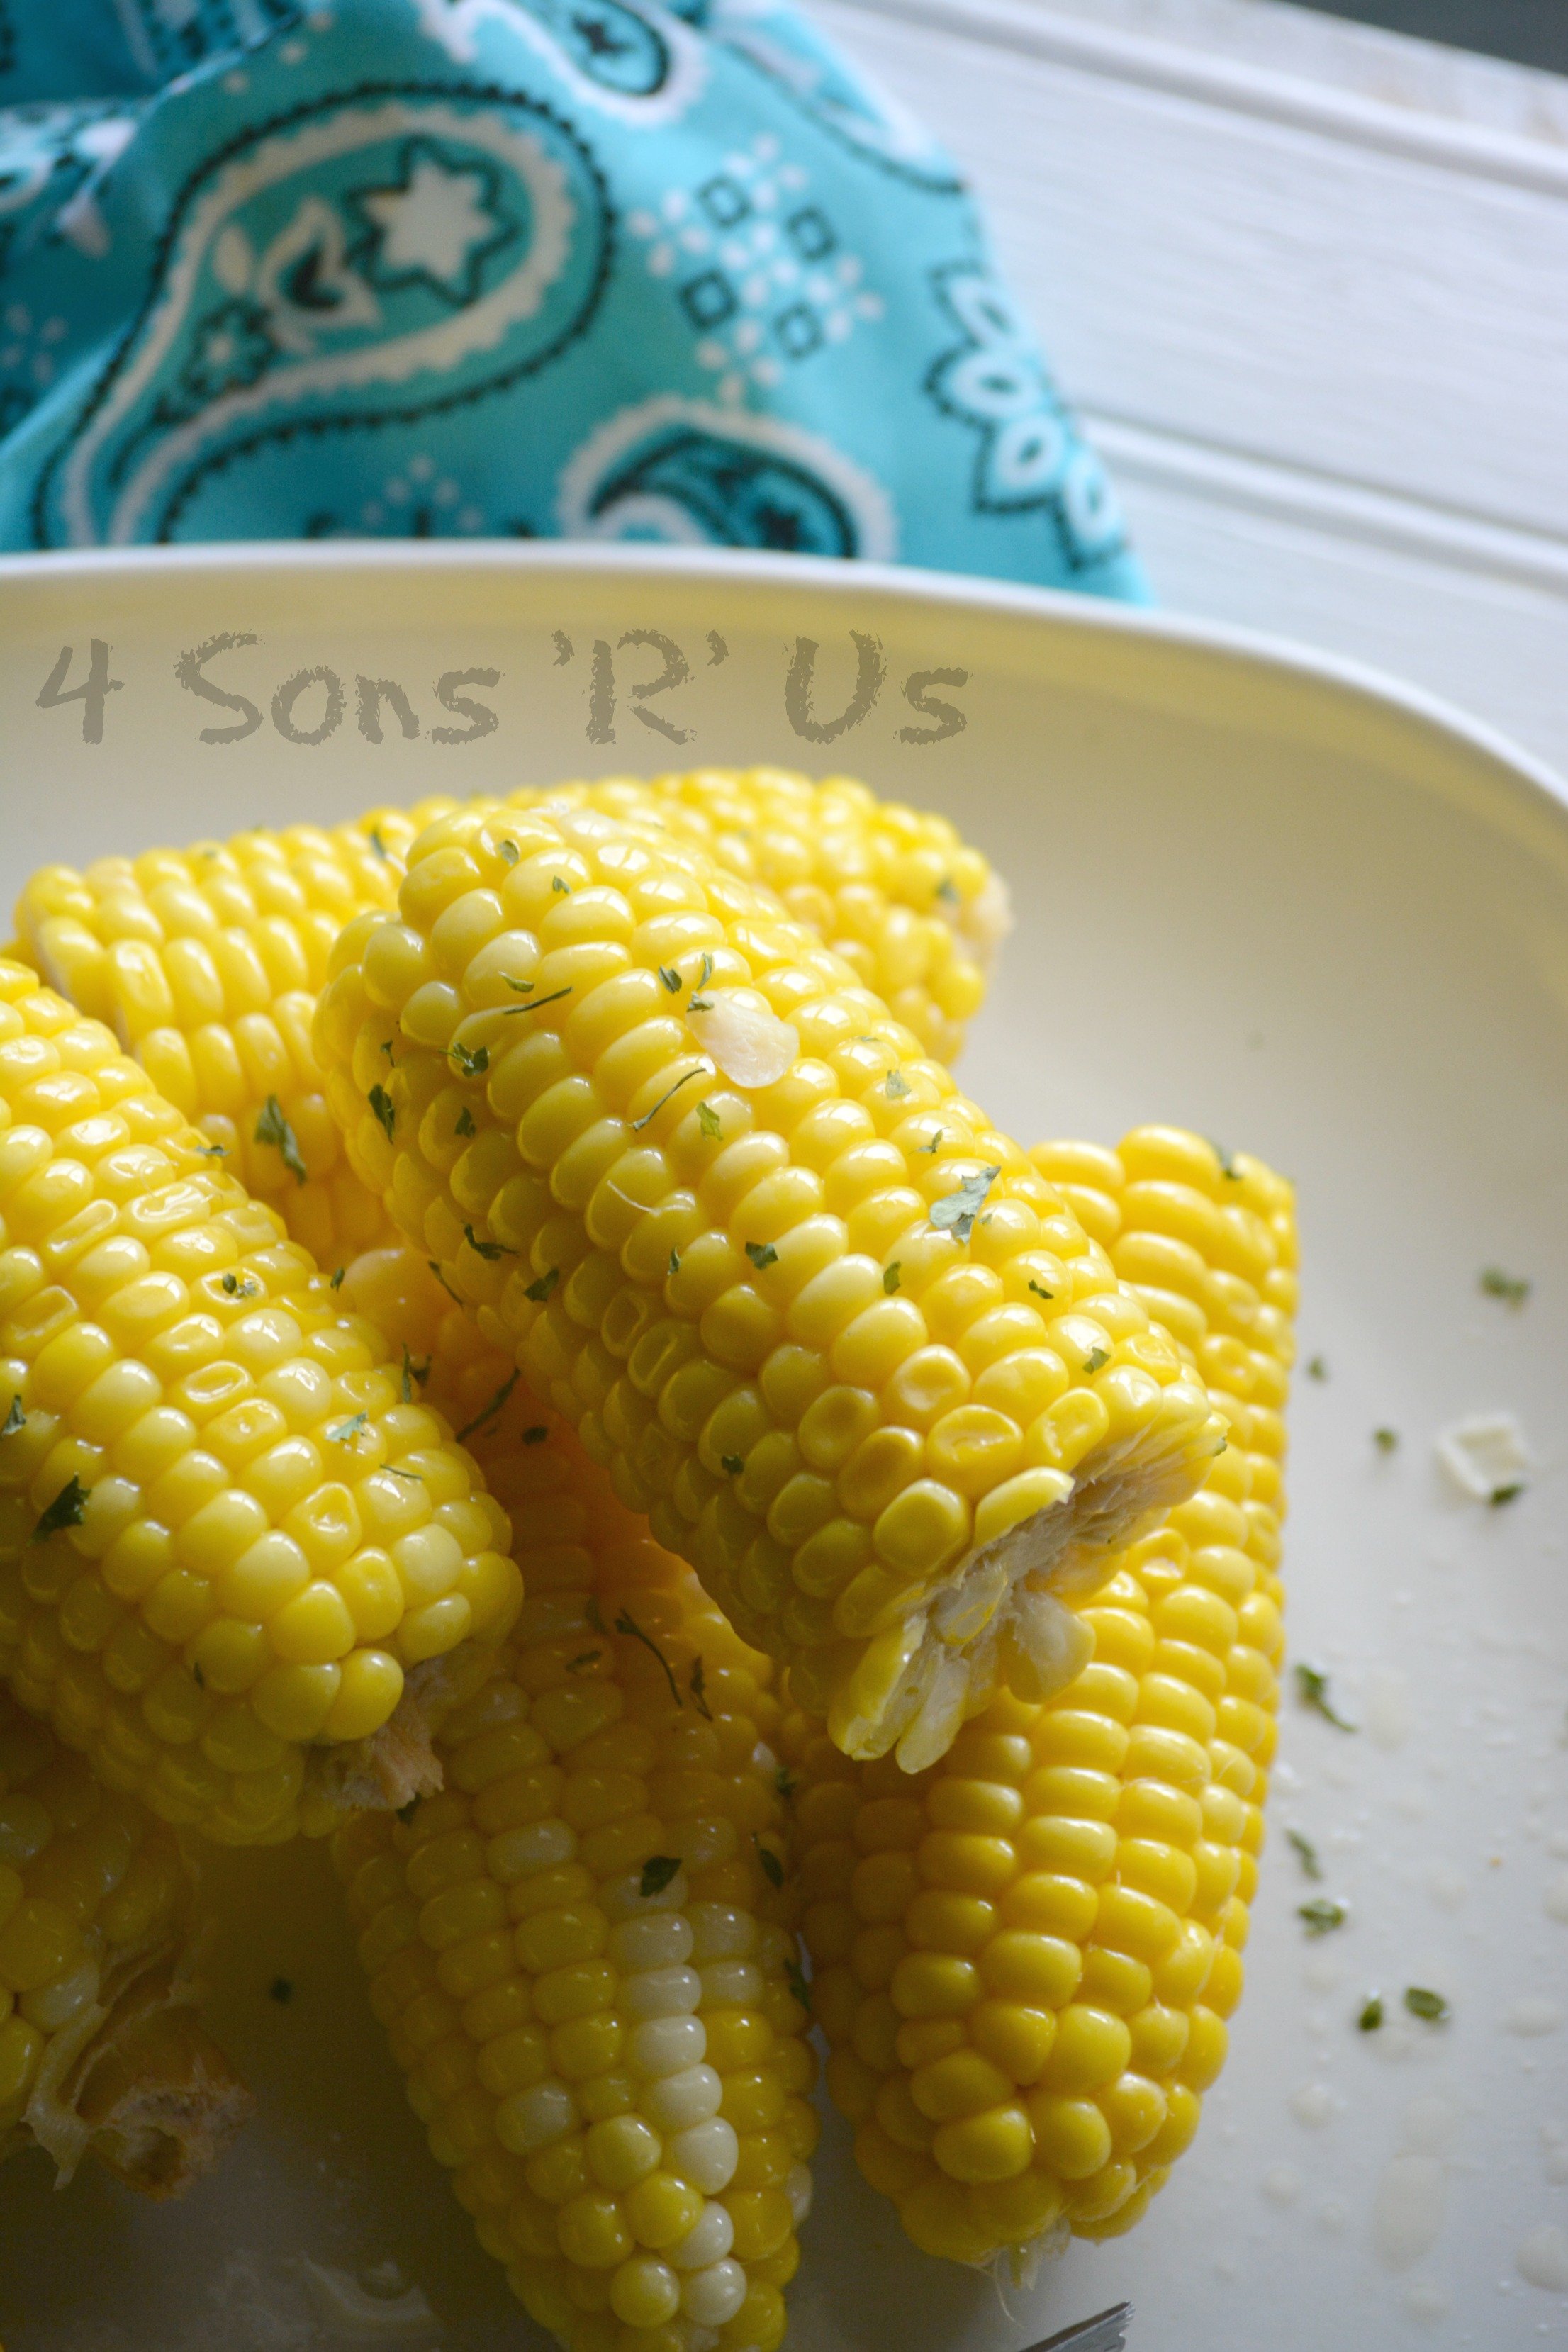 Milk & Honey Sweet Corn 3 - 4 Sons 'R' Us